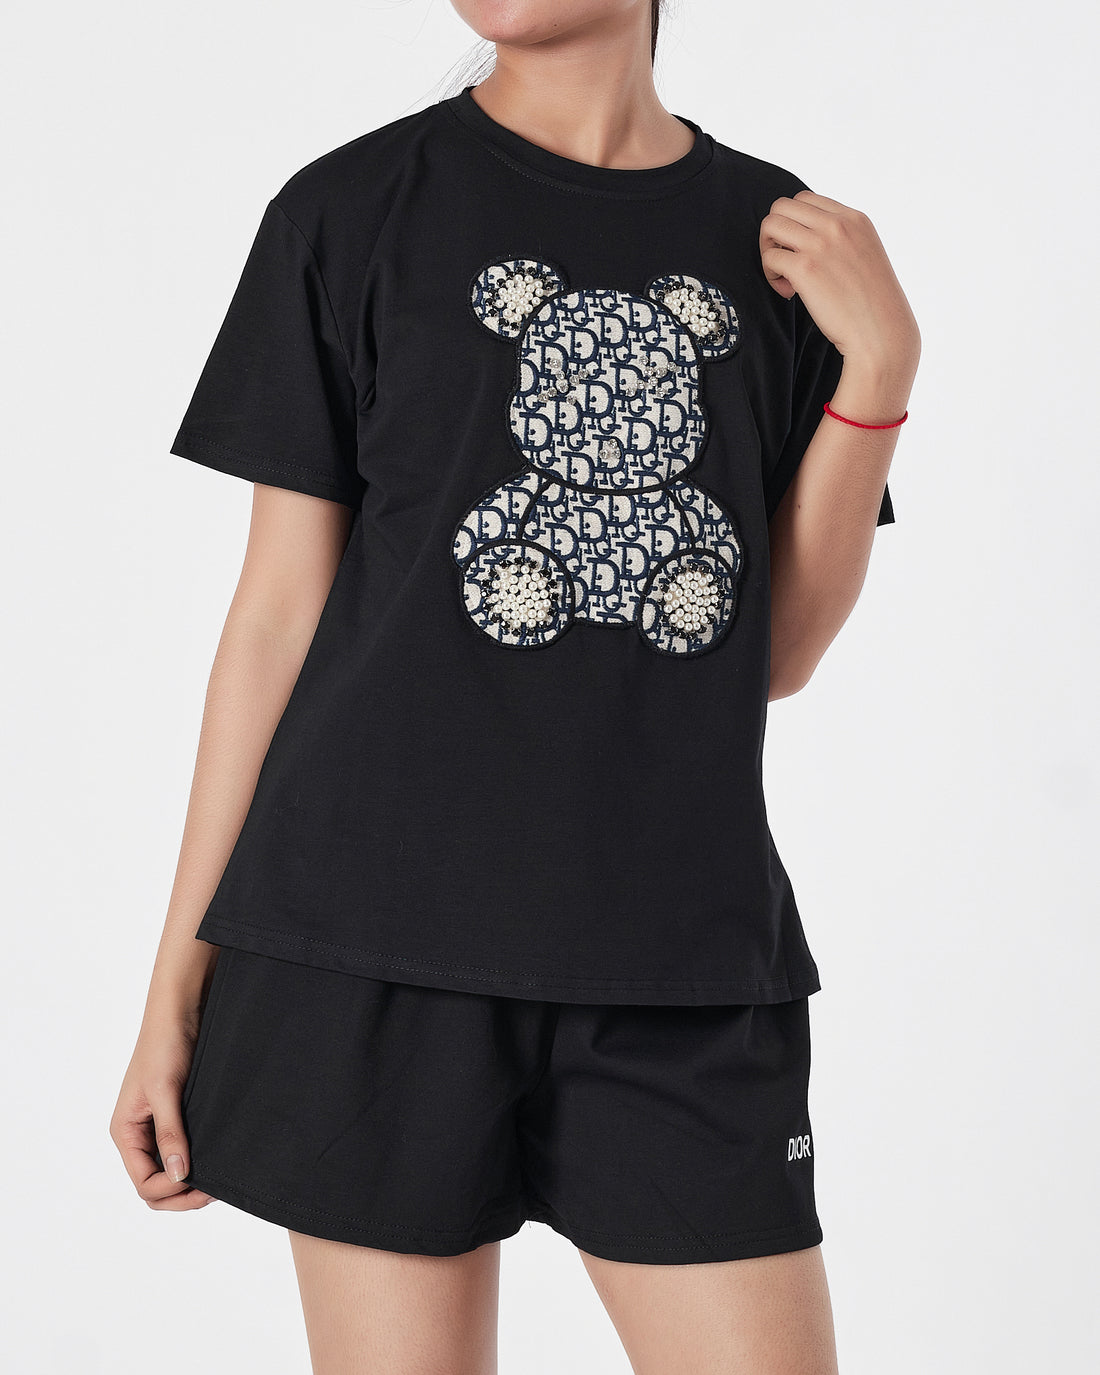 CD Bear Lady Black T-Shirt + Shorts 2 Piece Outfit 24.90